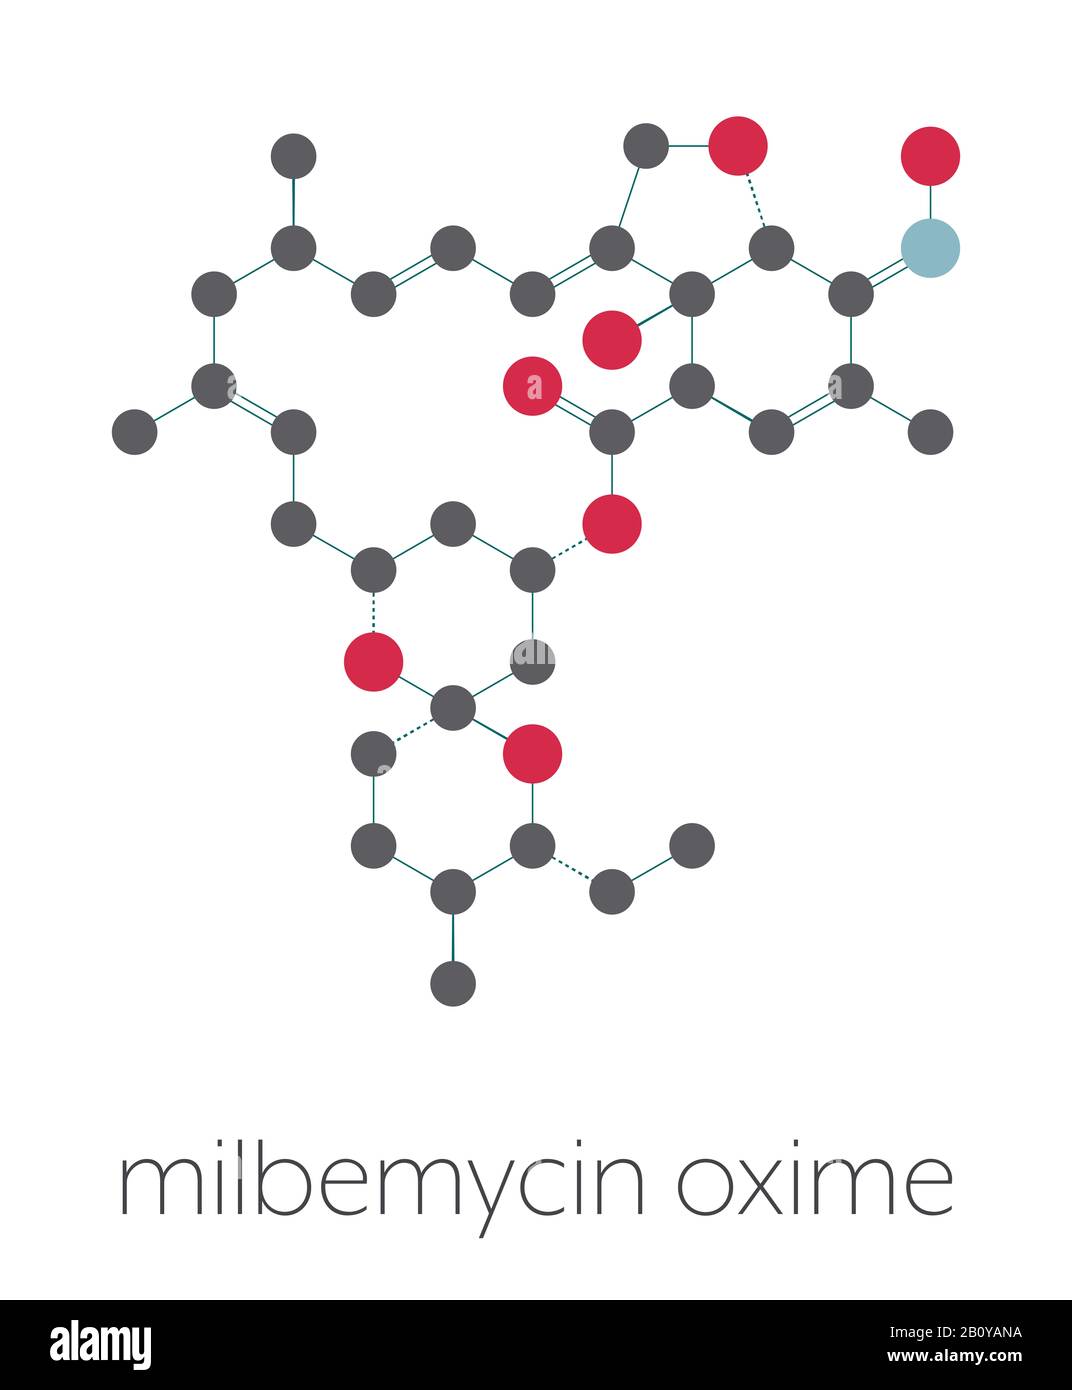 Milbemycin oxime antiparasitic drug molecule, illustration Stock Photo